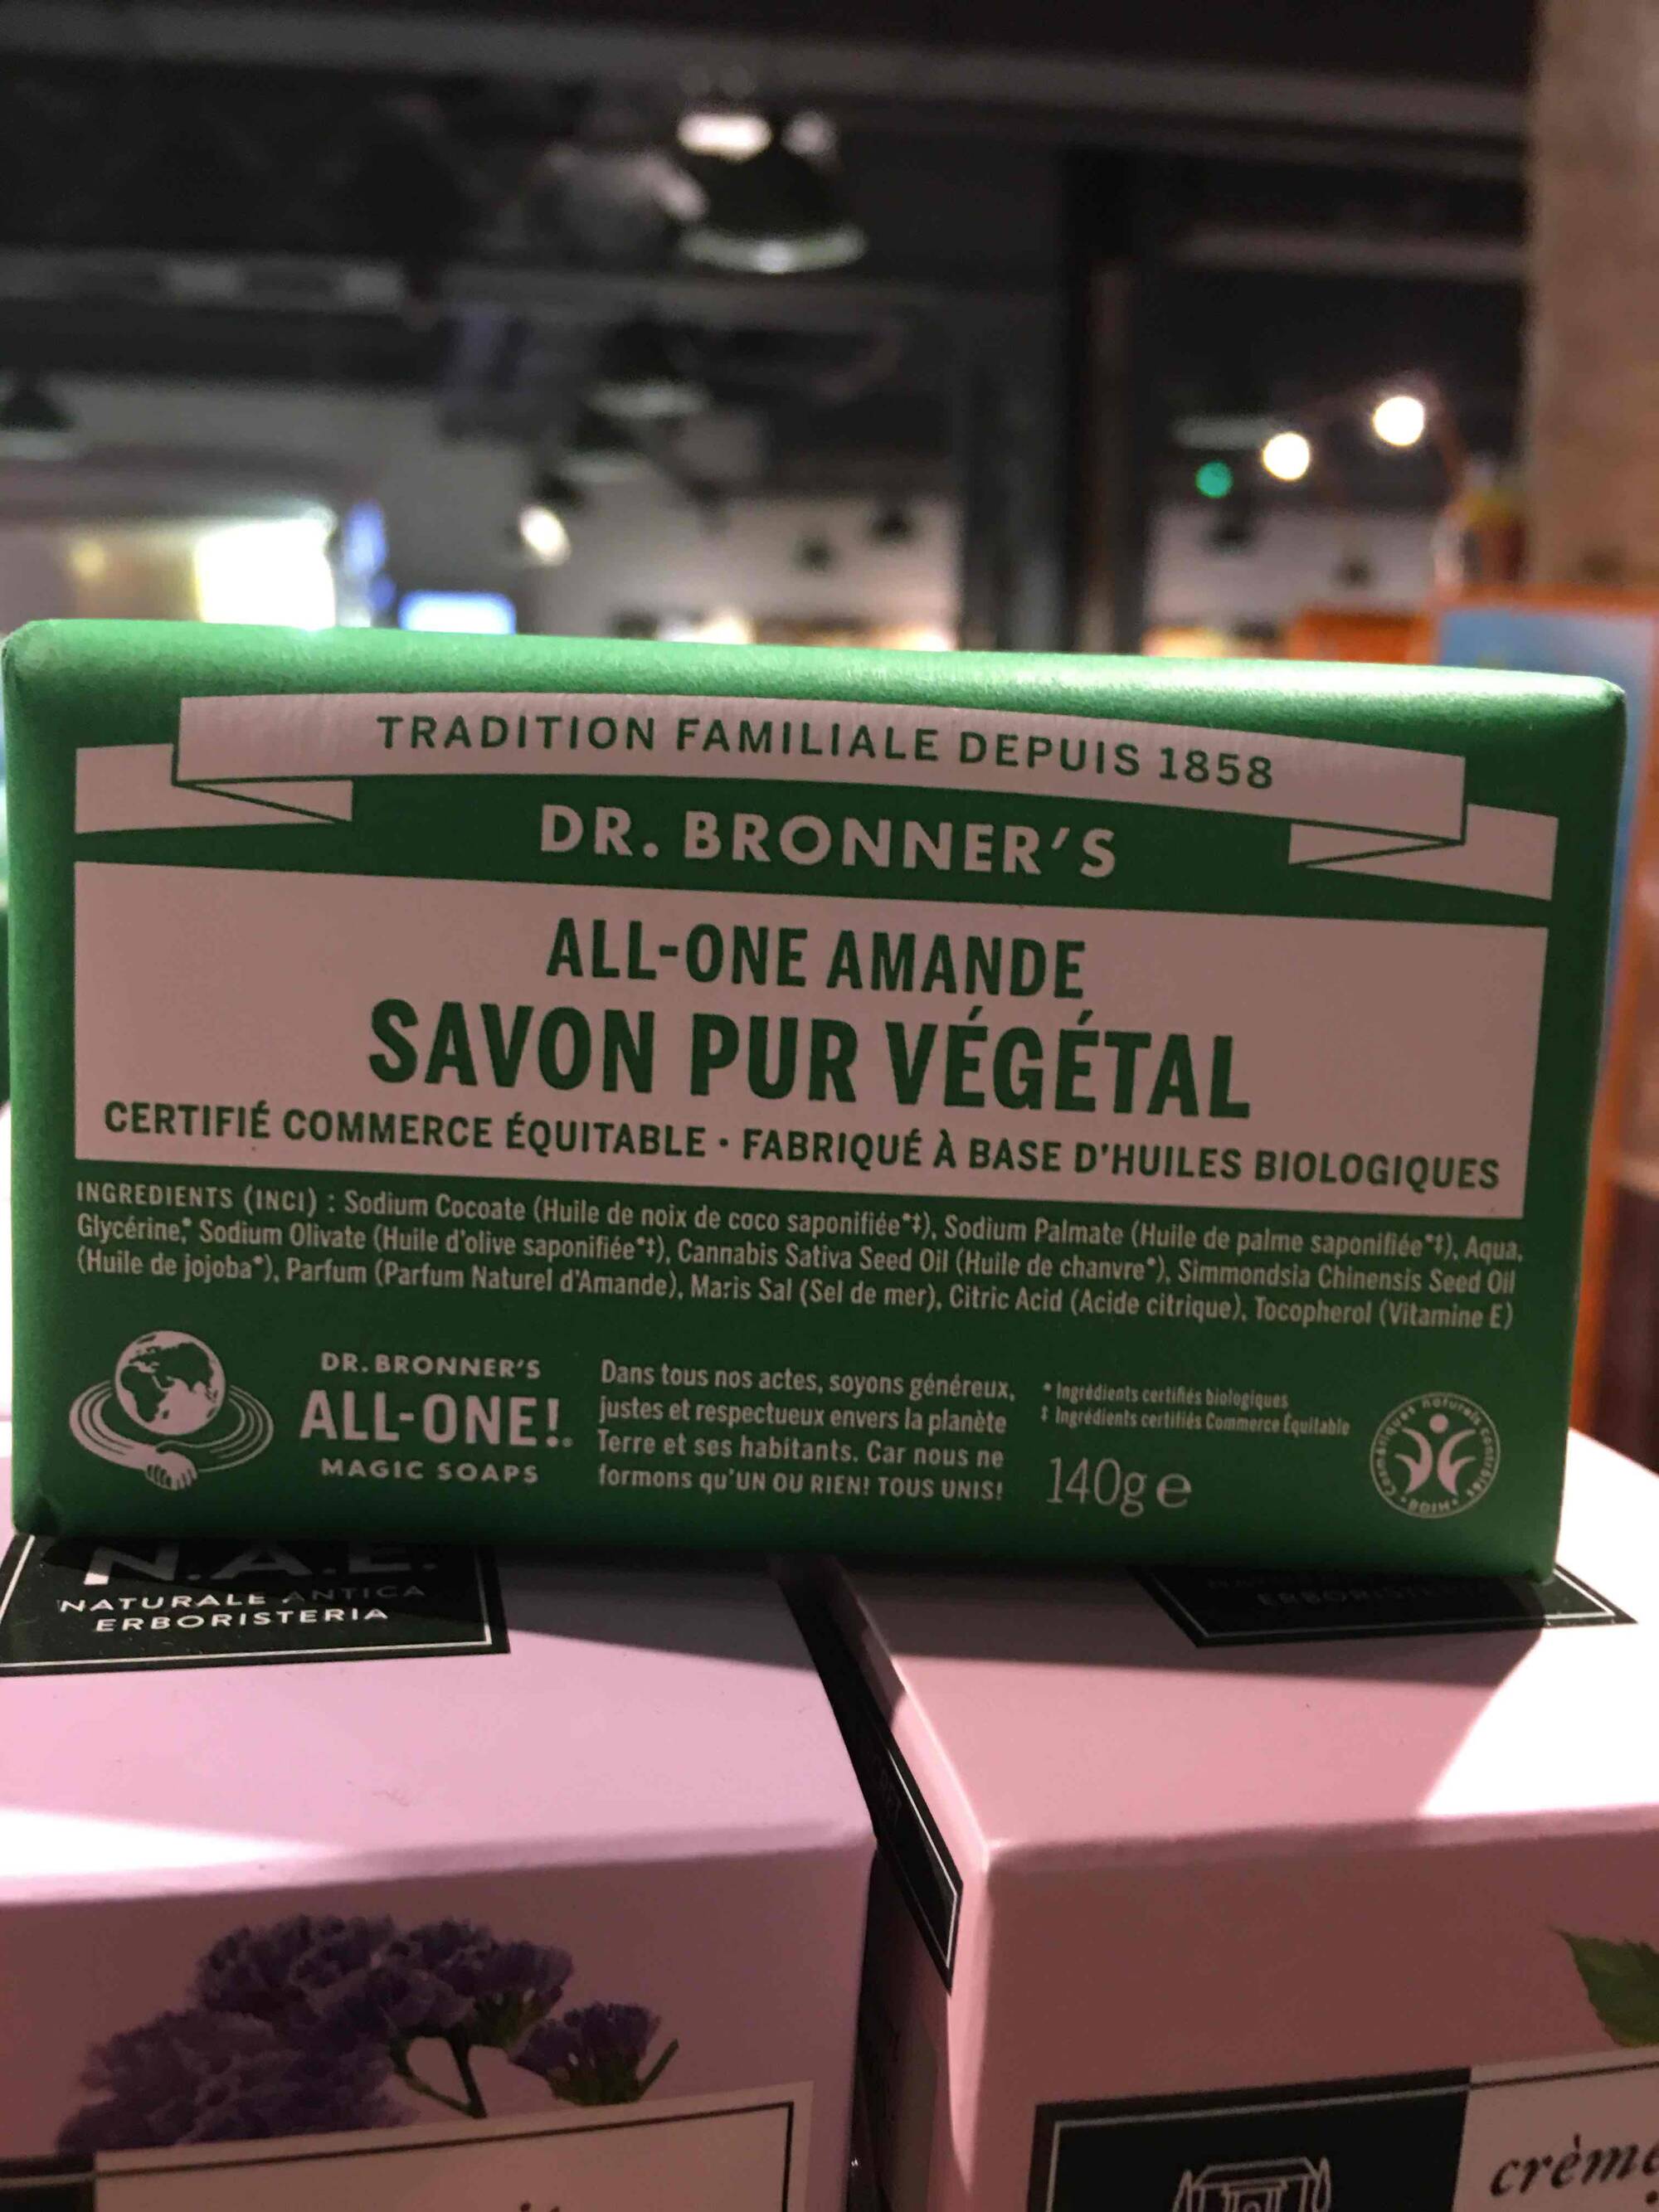 DR. BRONNER'S - Savon pur vegetal 